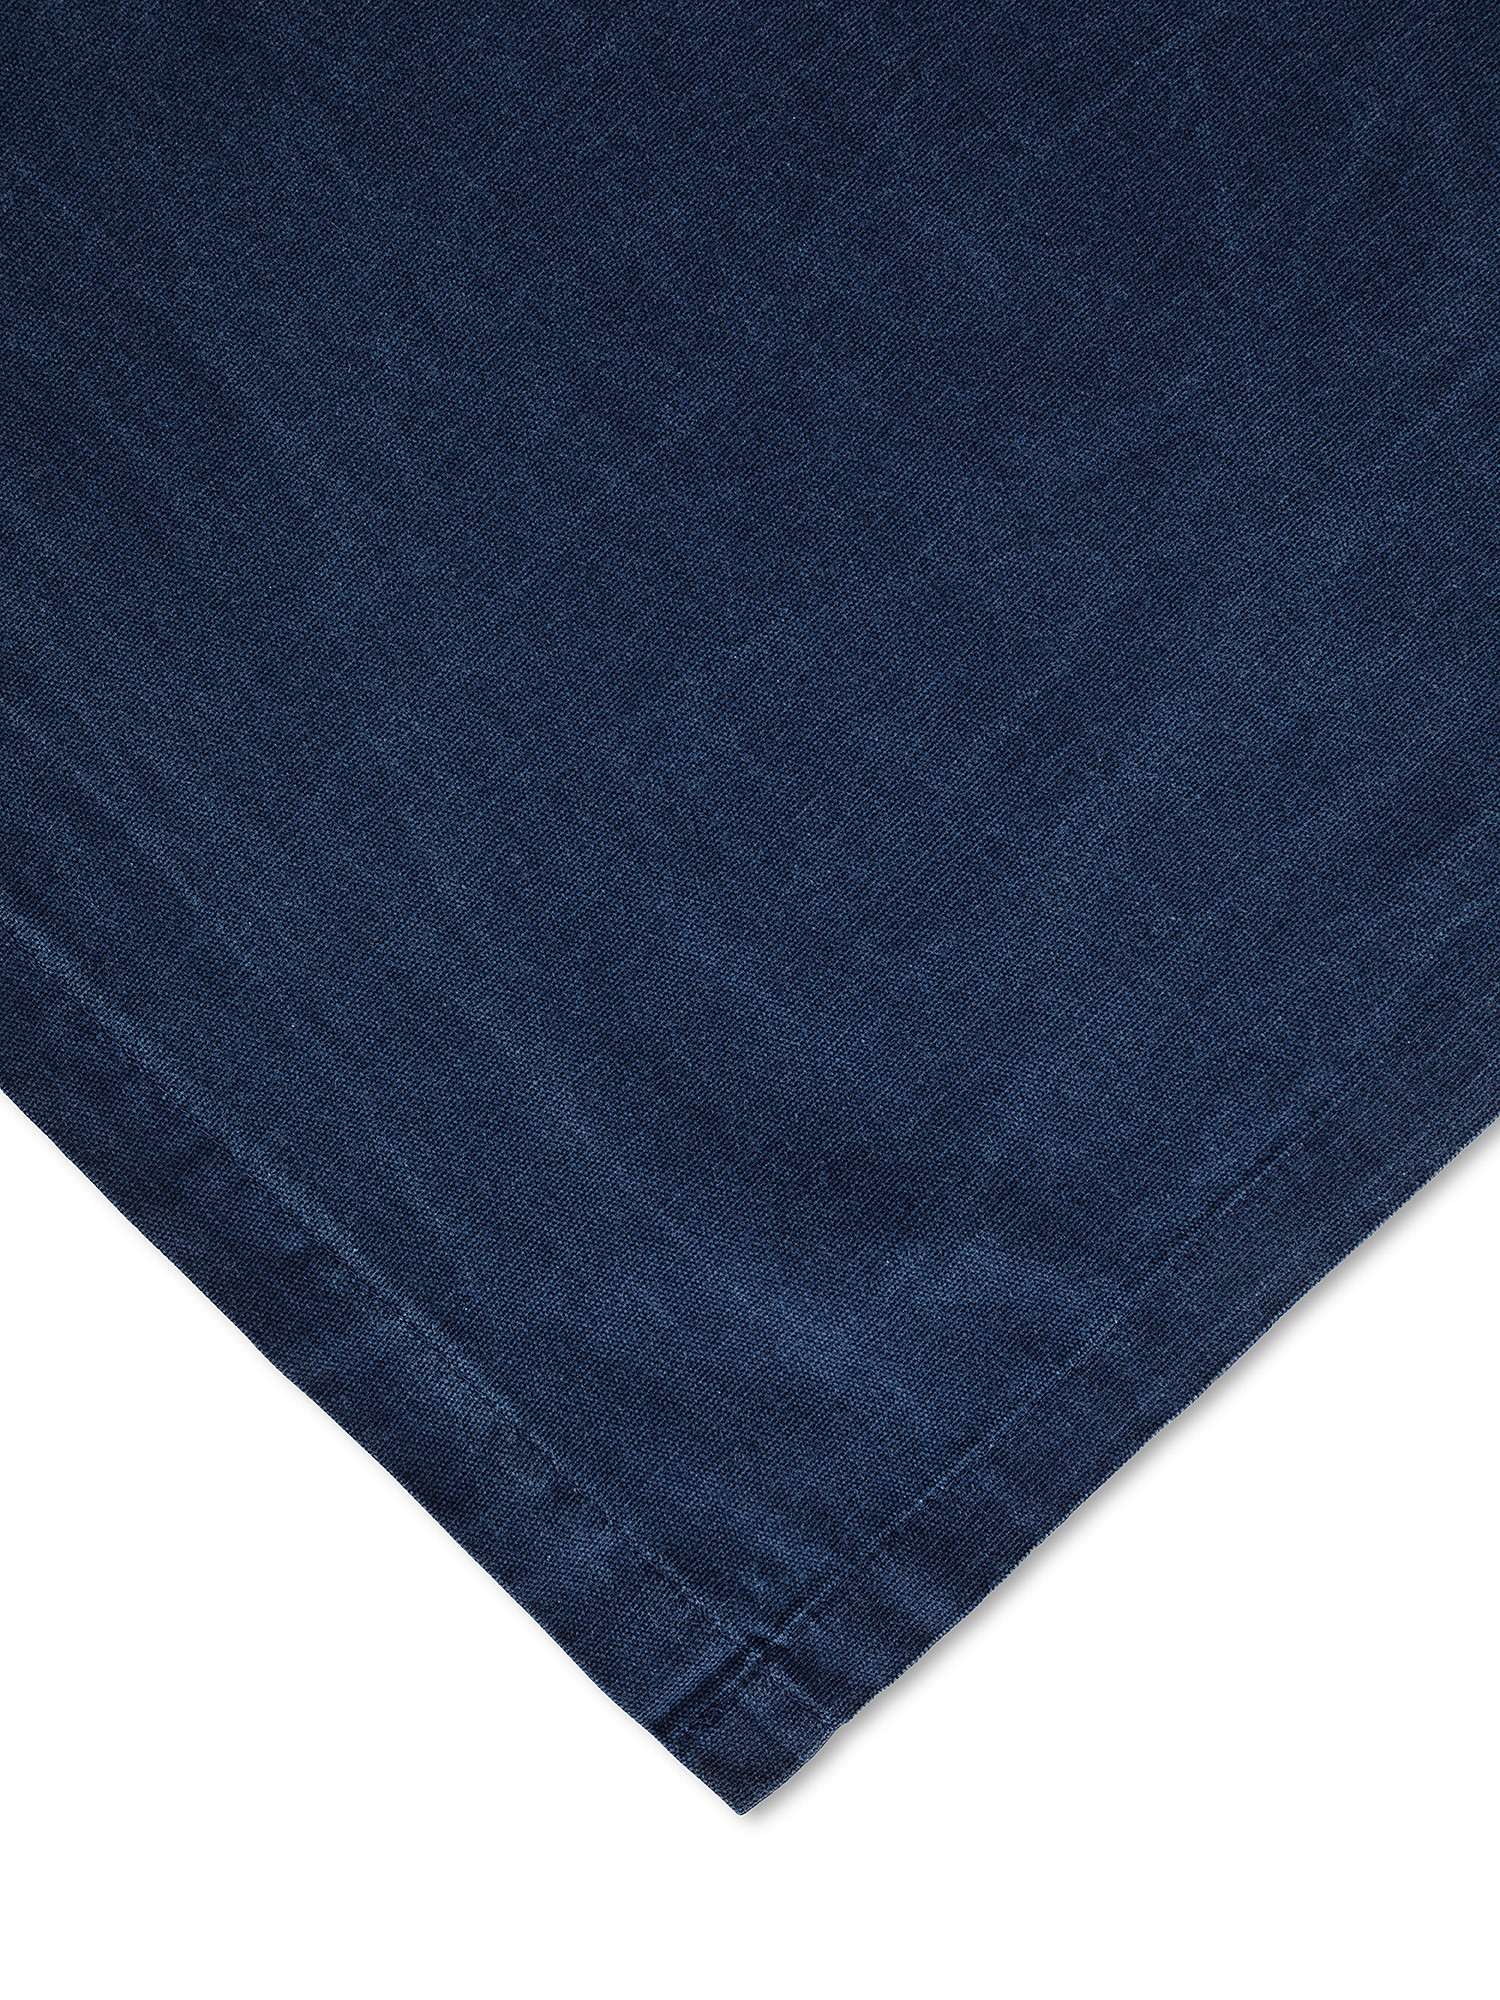 Tovaglia centrotavola cotone lavato tinta unita, Blu, large image number 1